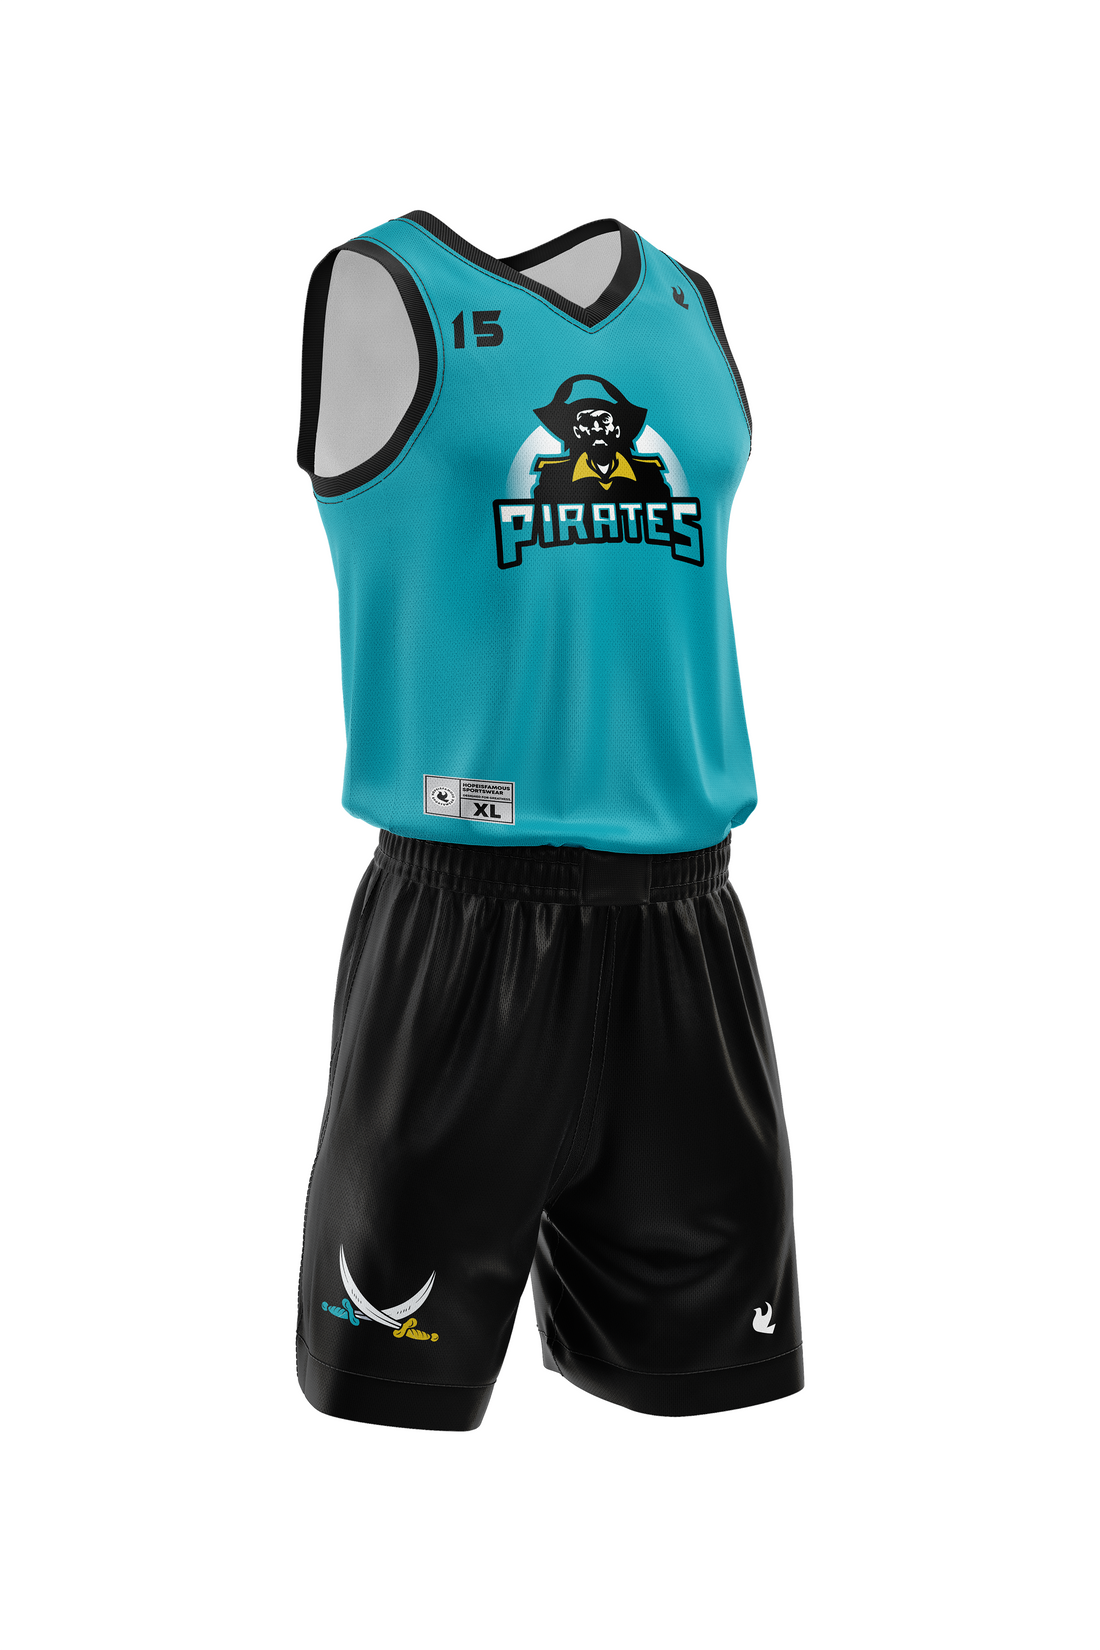 M-Power Basketball Uniform: Pirates